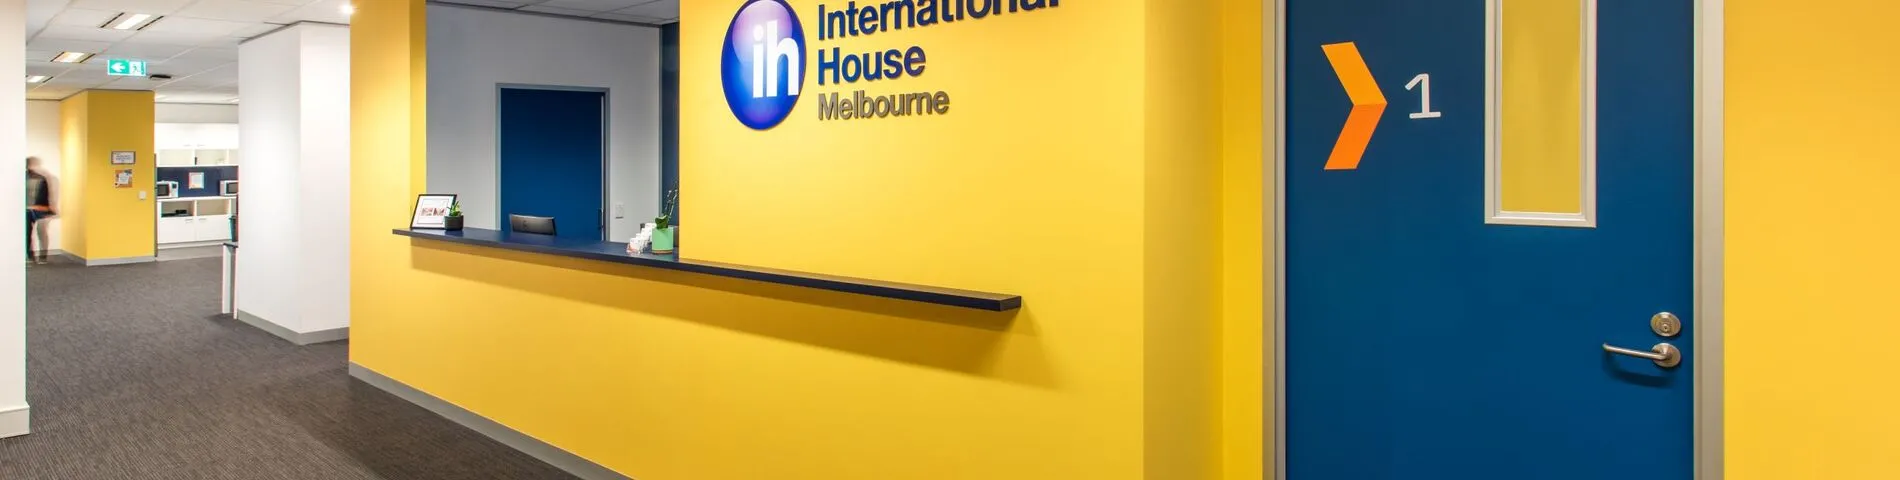 International House画像1